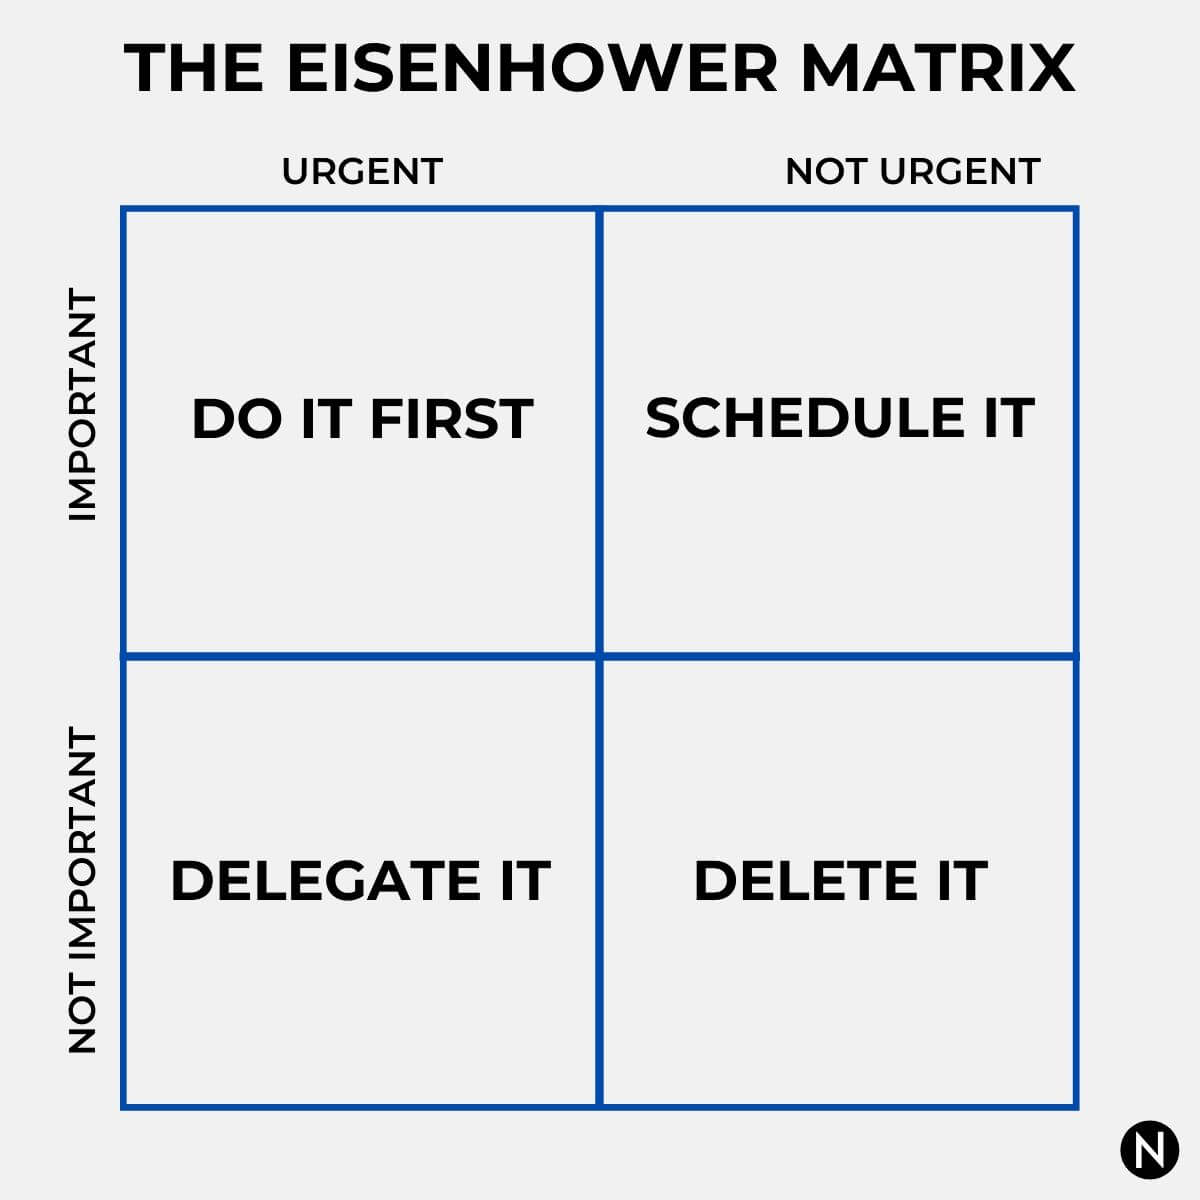 The Eisenhower matrix